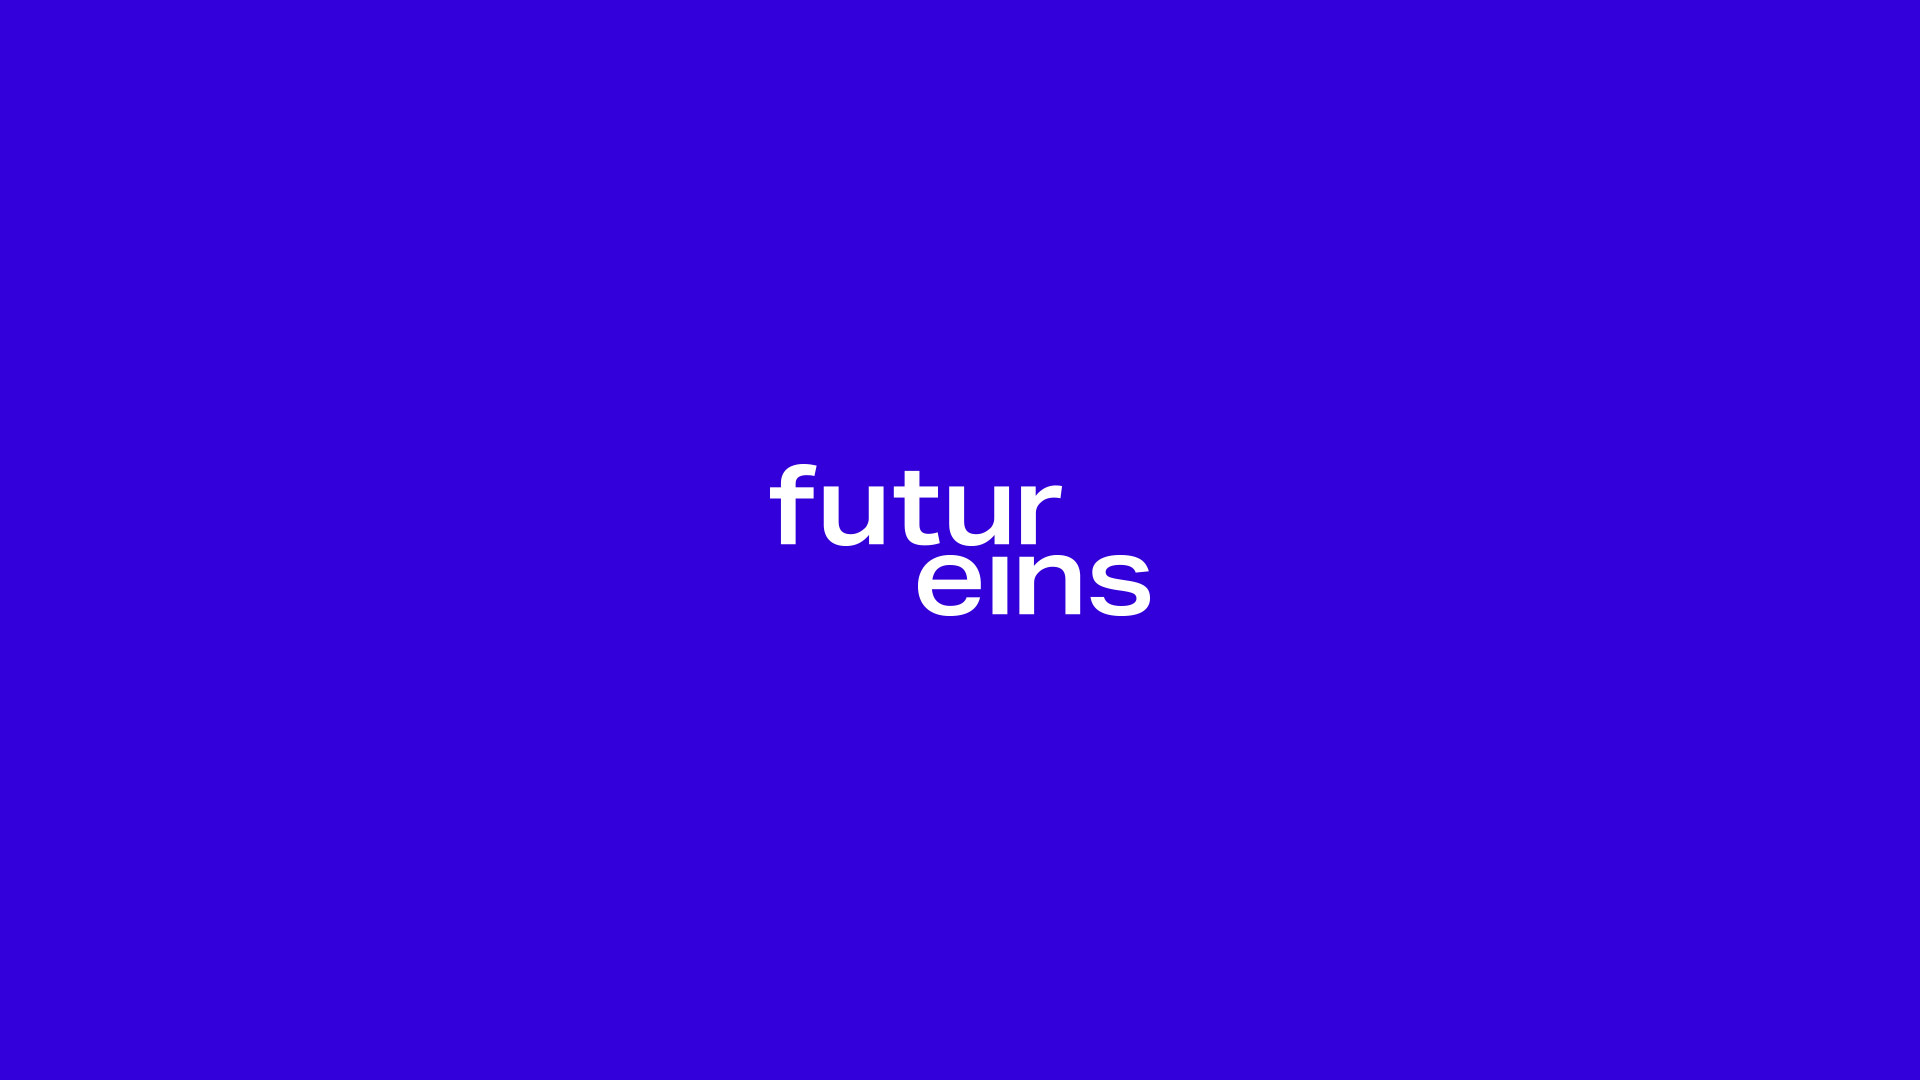 (c) Futureins.org